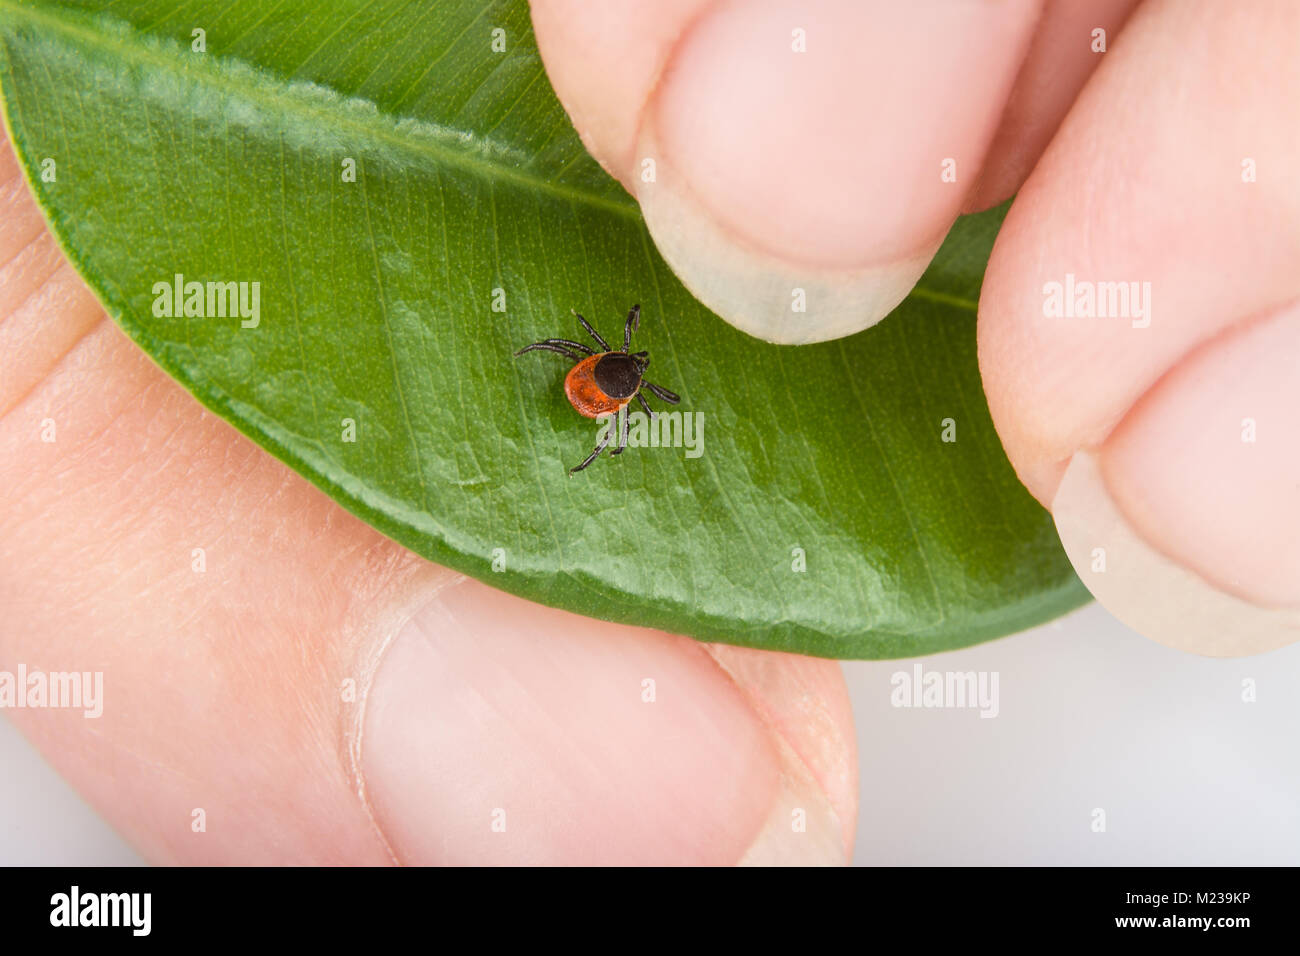 Castor bean tick on shiny green leaf. Ixodes ricinus. Close-up of human fingers and dangerous parasitic mite. Encephalitis, Lyme Disease, Borreliosis. Stock Photo